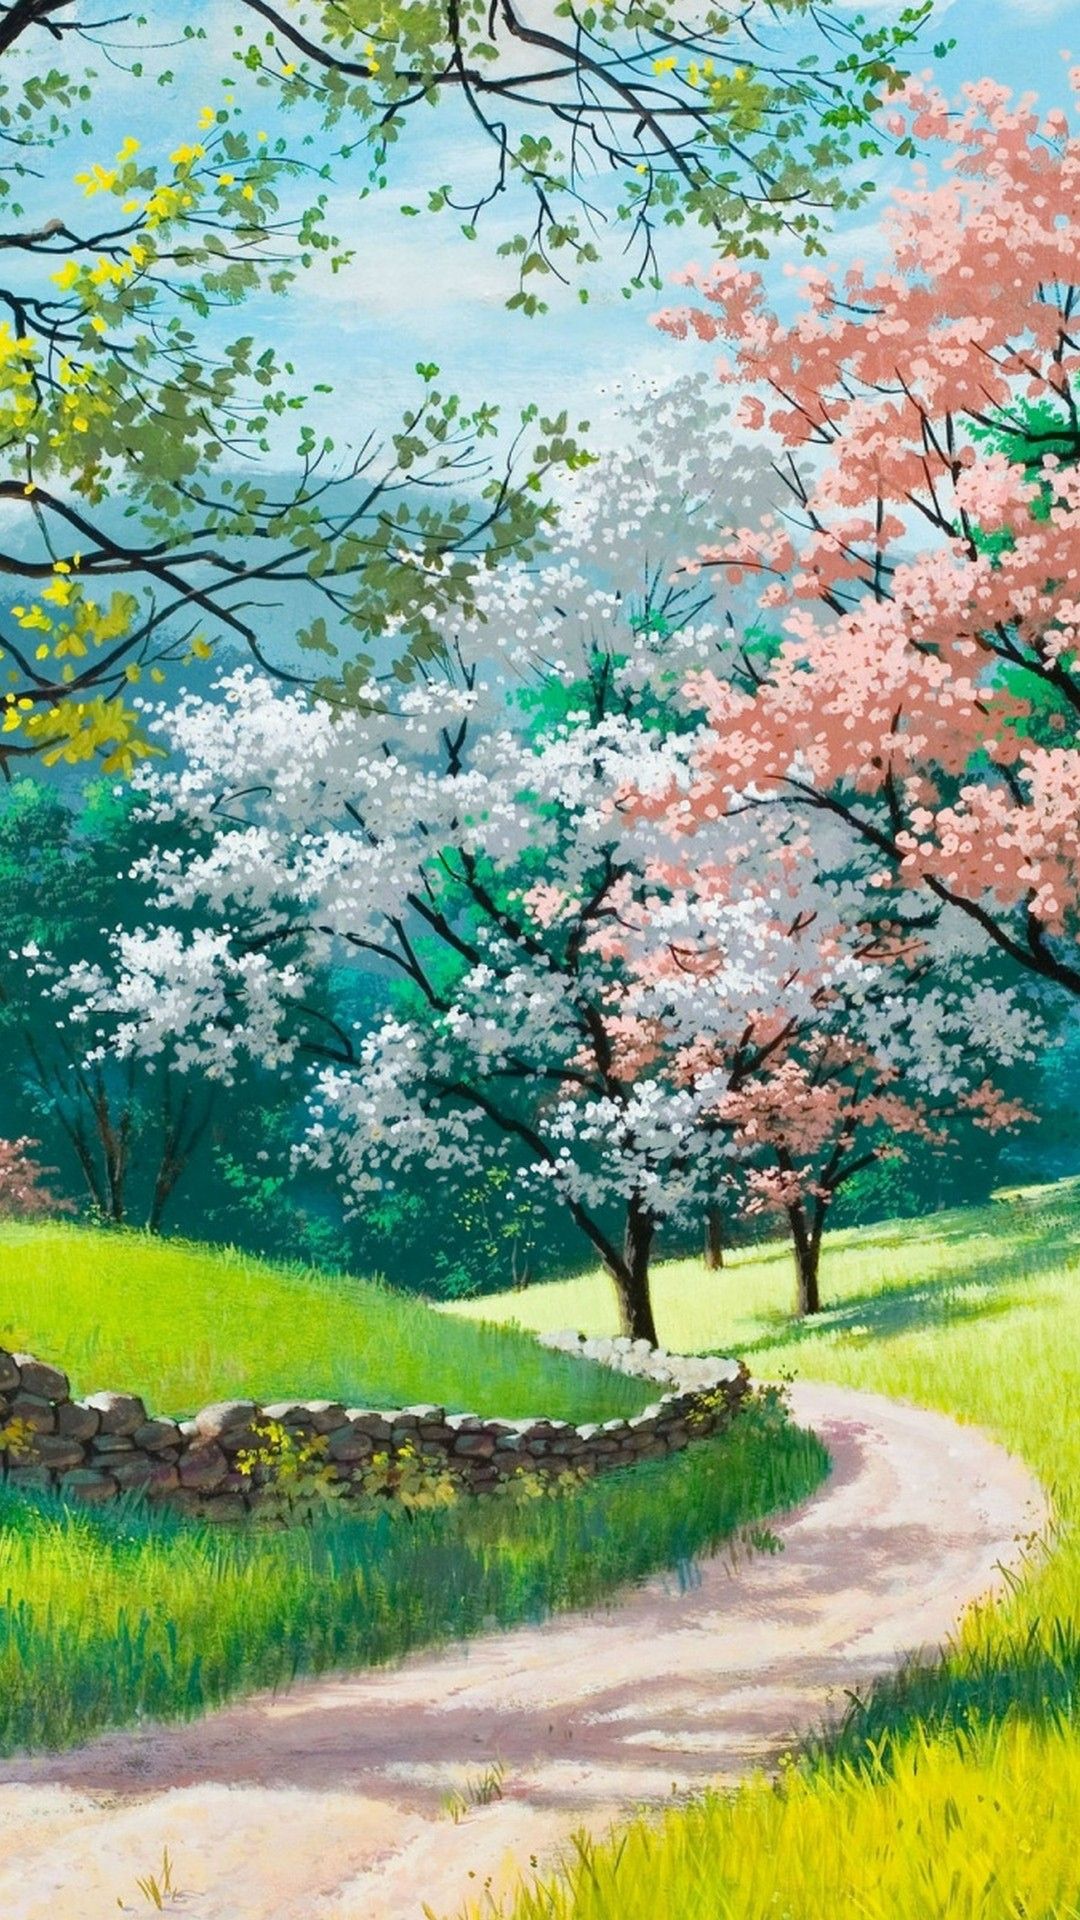 spring scenery wallpaper,blossom,nature,tree,natural landscape,spring